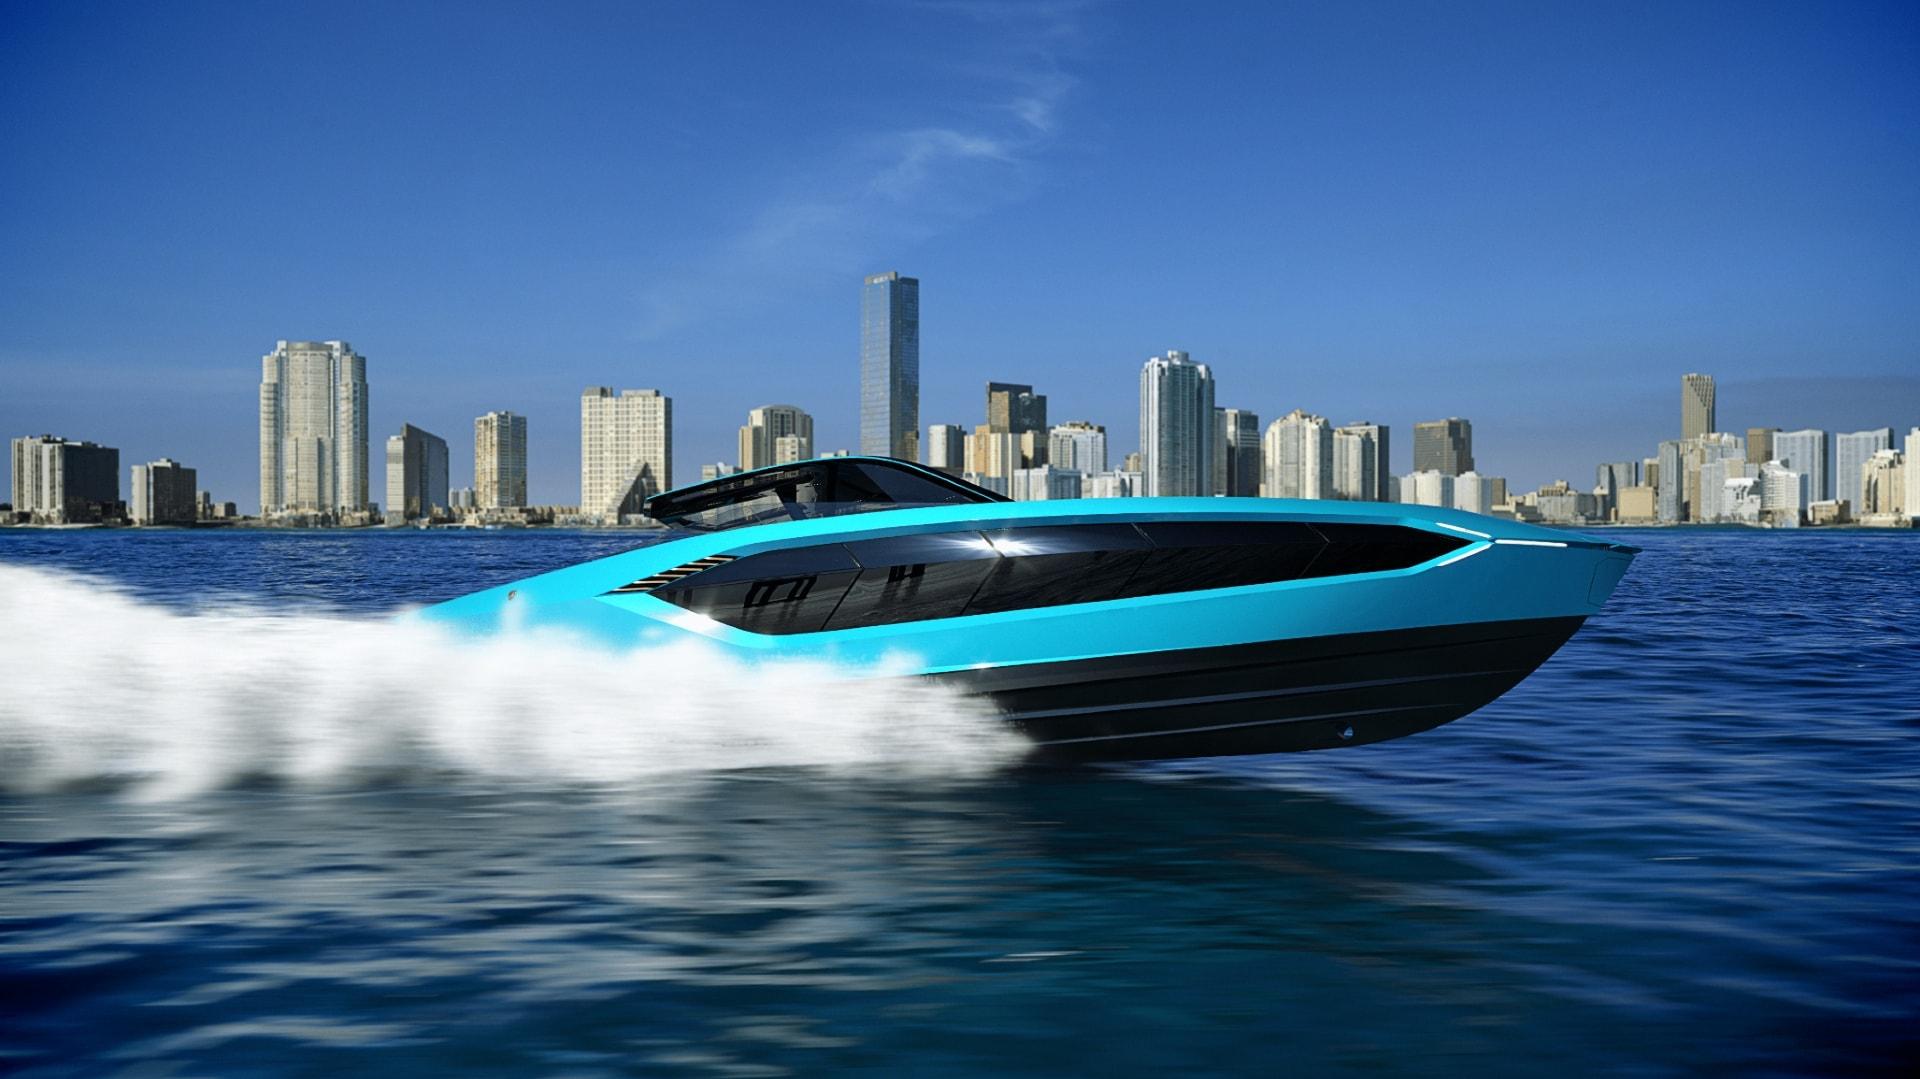 Tecnomar for Lamborghini 63 the motor yacht unveiled